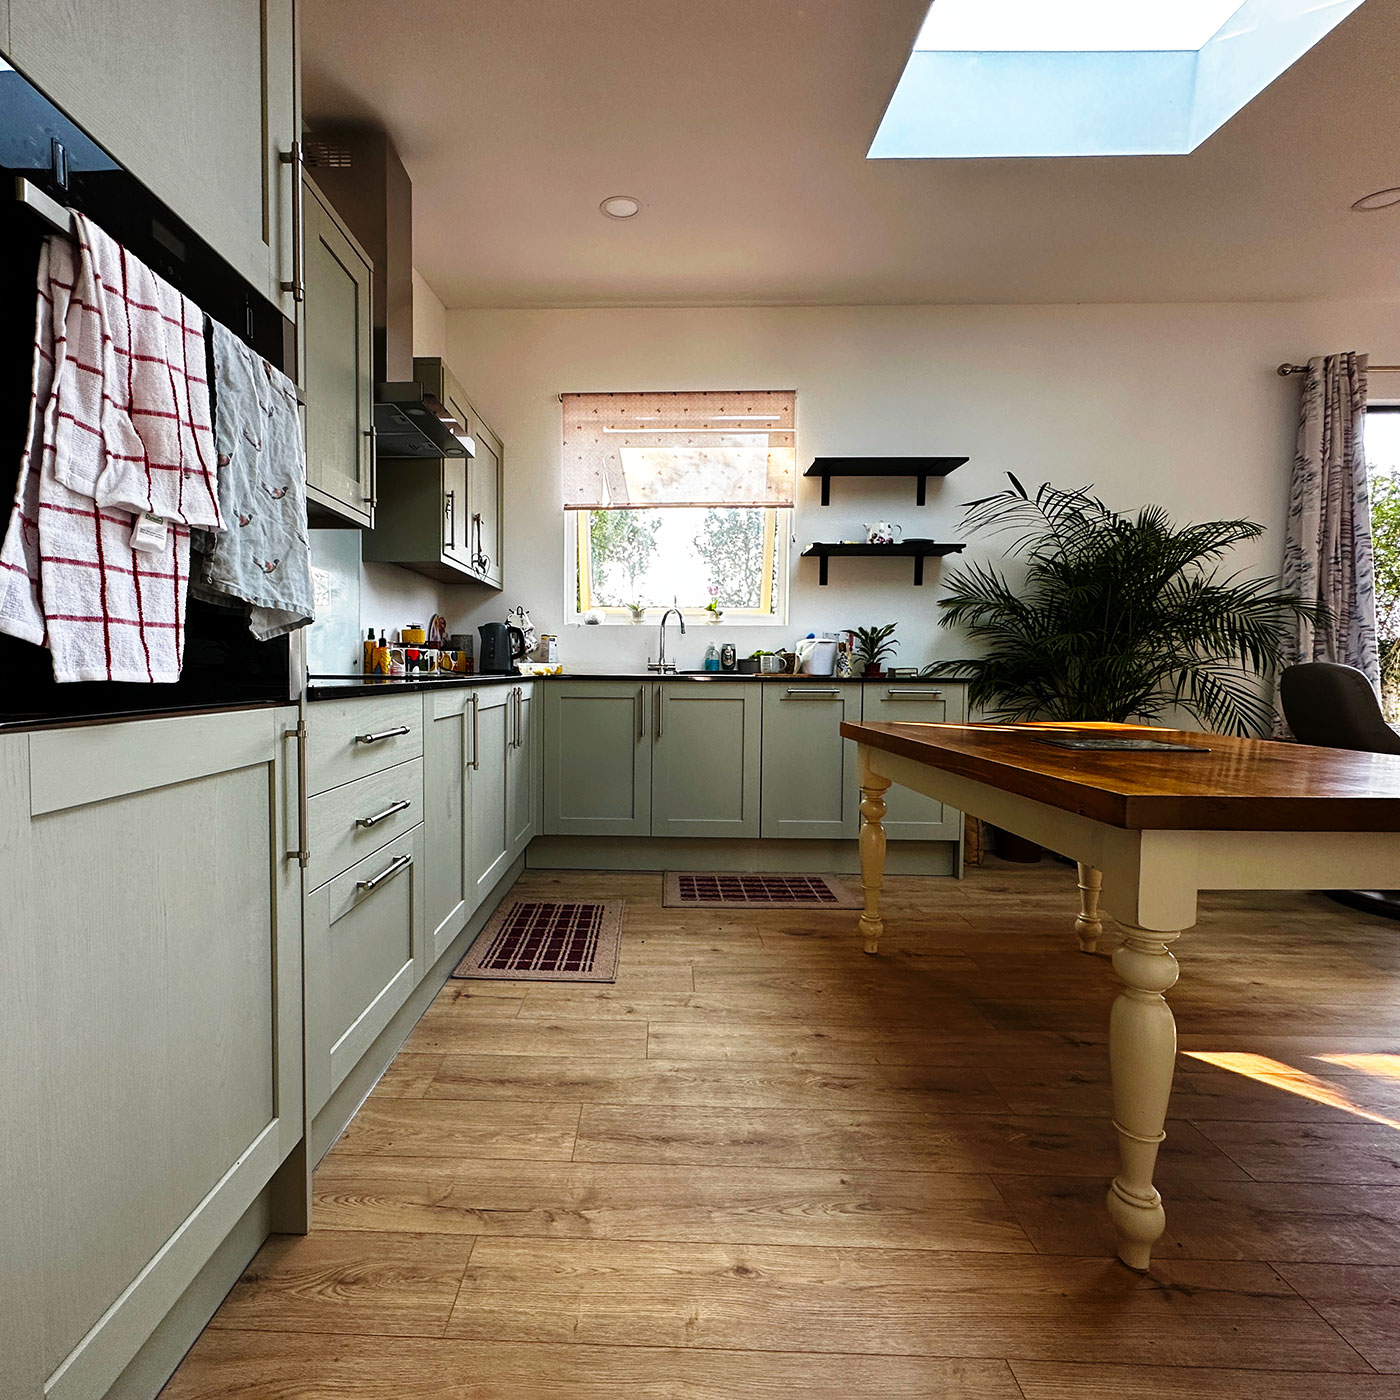 Interior design of kitchen for mobile home